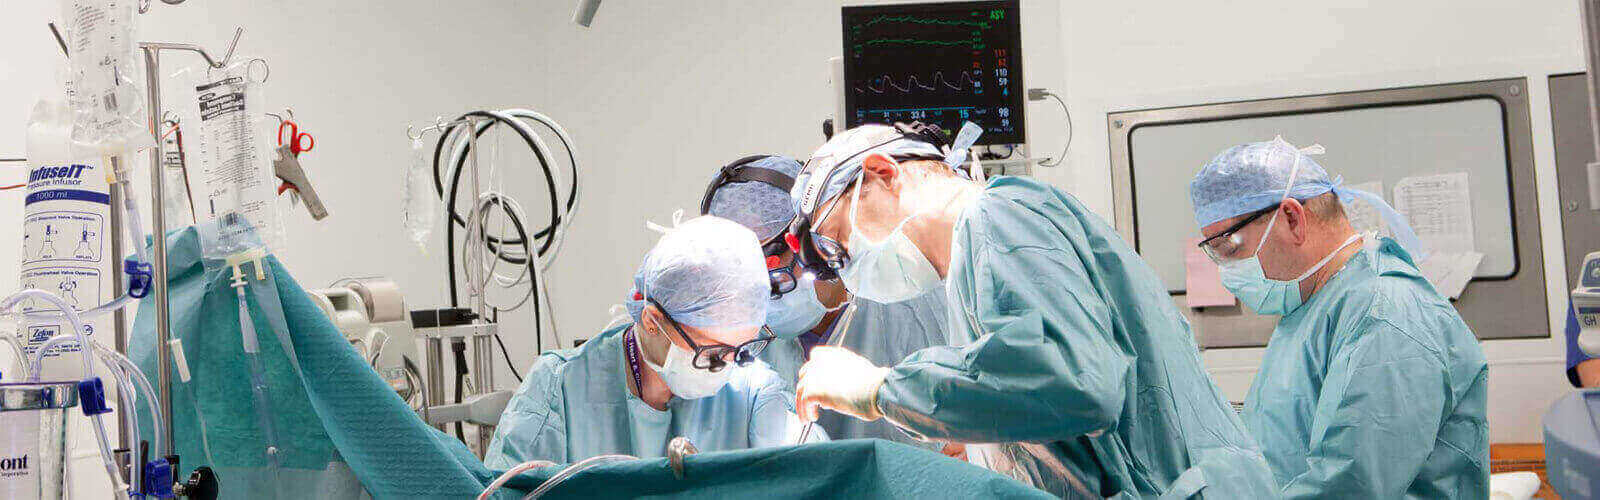 Heart Surgery Or Cardiac Surgery in Canada